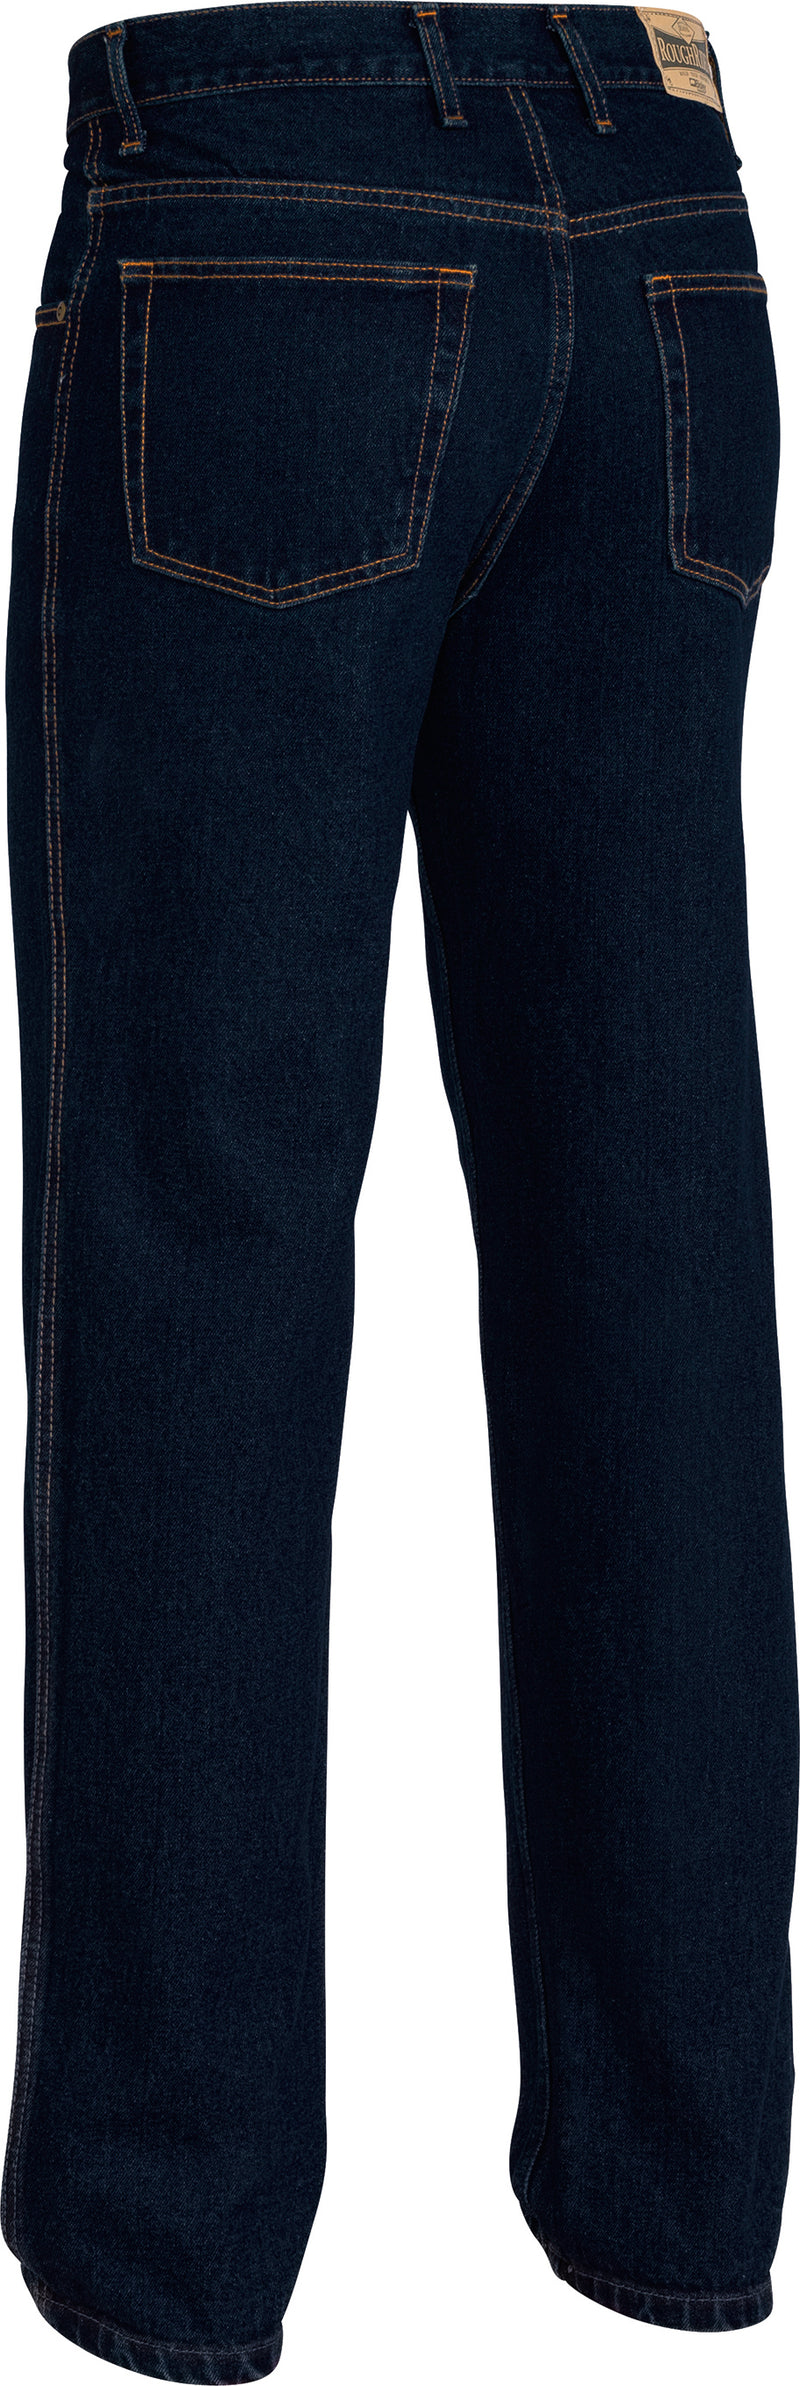 Load image into Gallery viewer, Wholesale BP6050 Bisley Rough Rider Denim Jeans - Regular Printed or Blank
